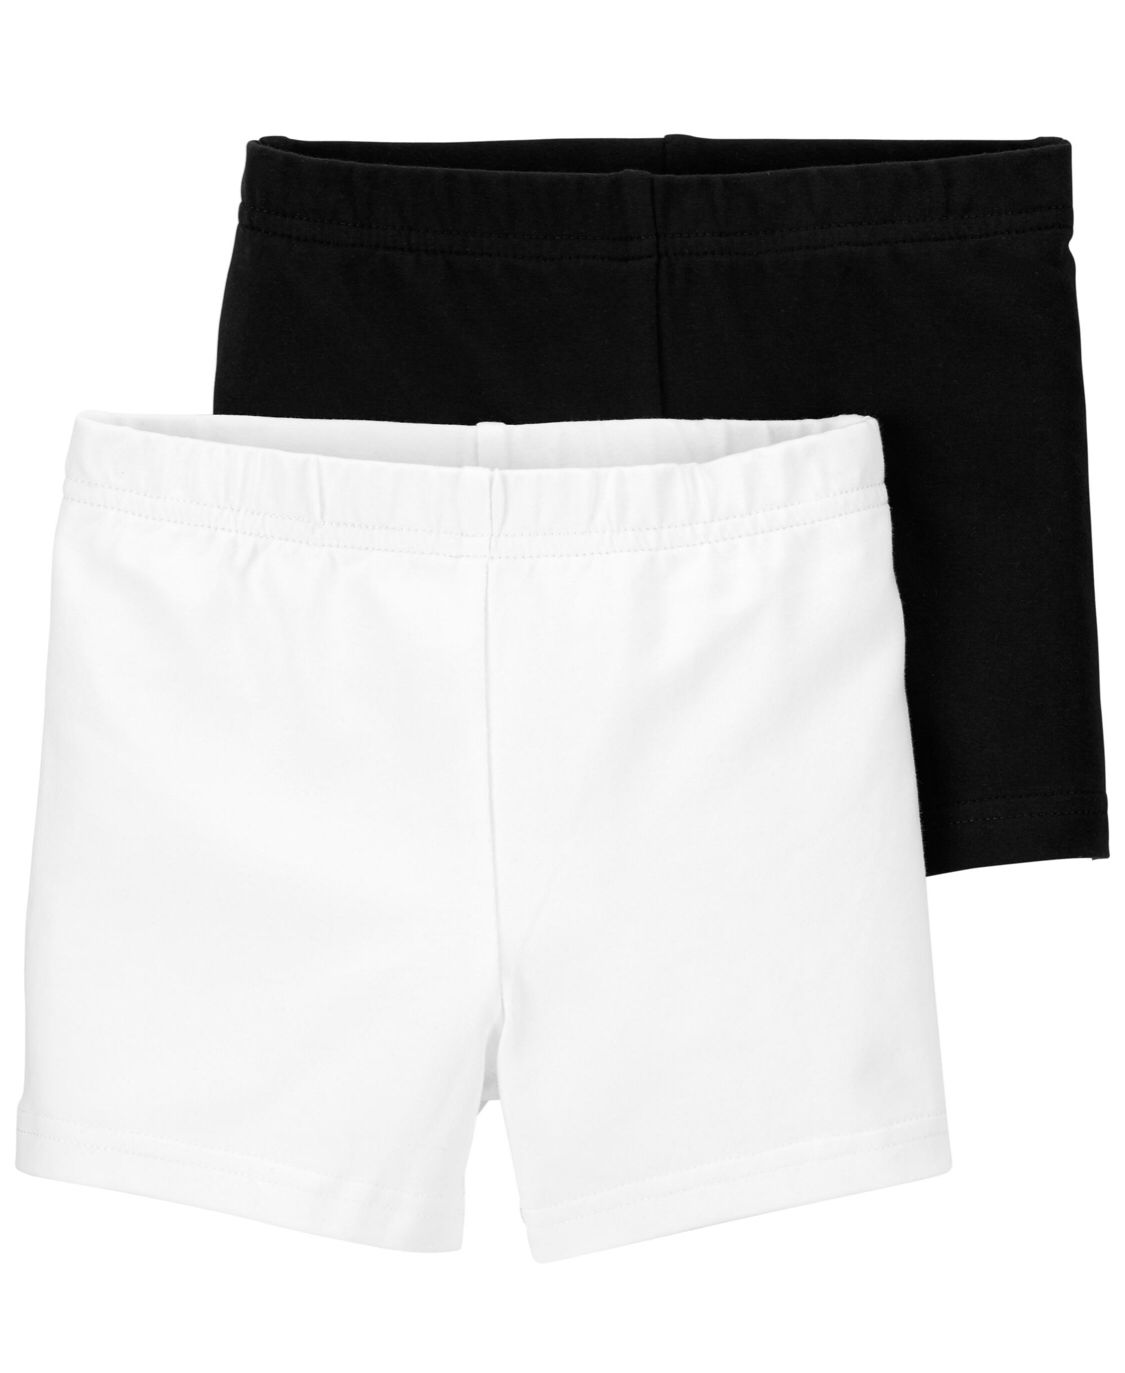 Kit Camiseta Heart + 2 shorts preto/branco - Carters